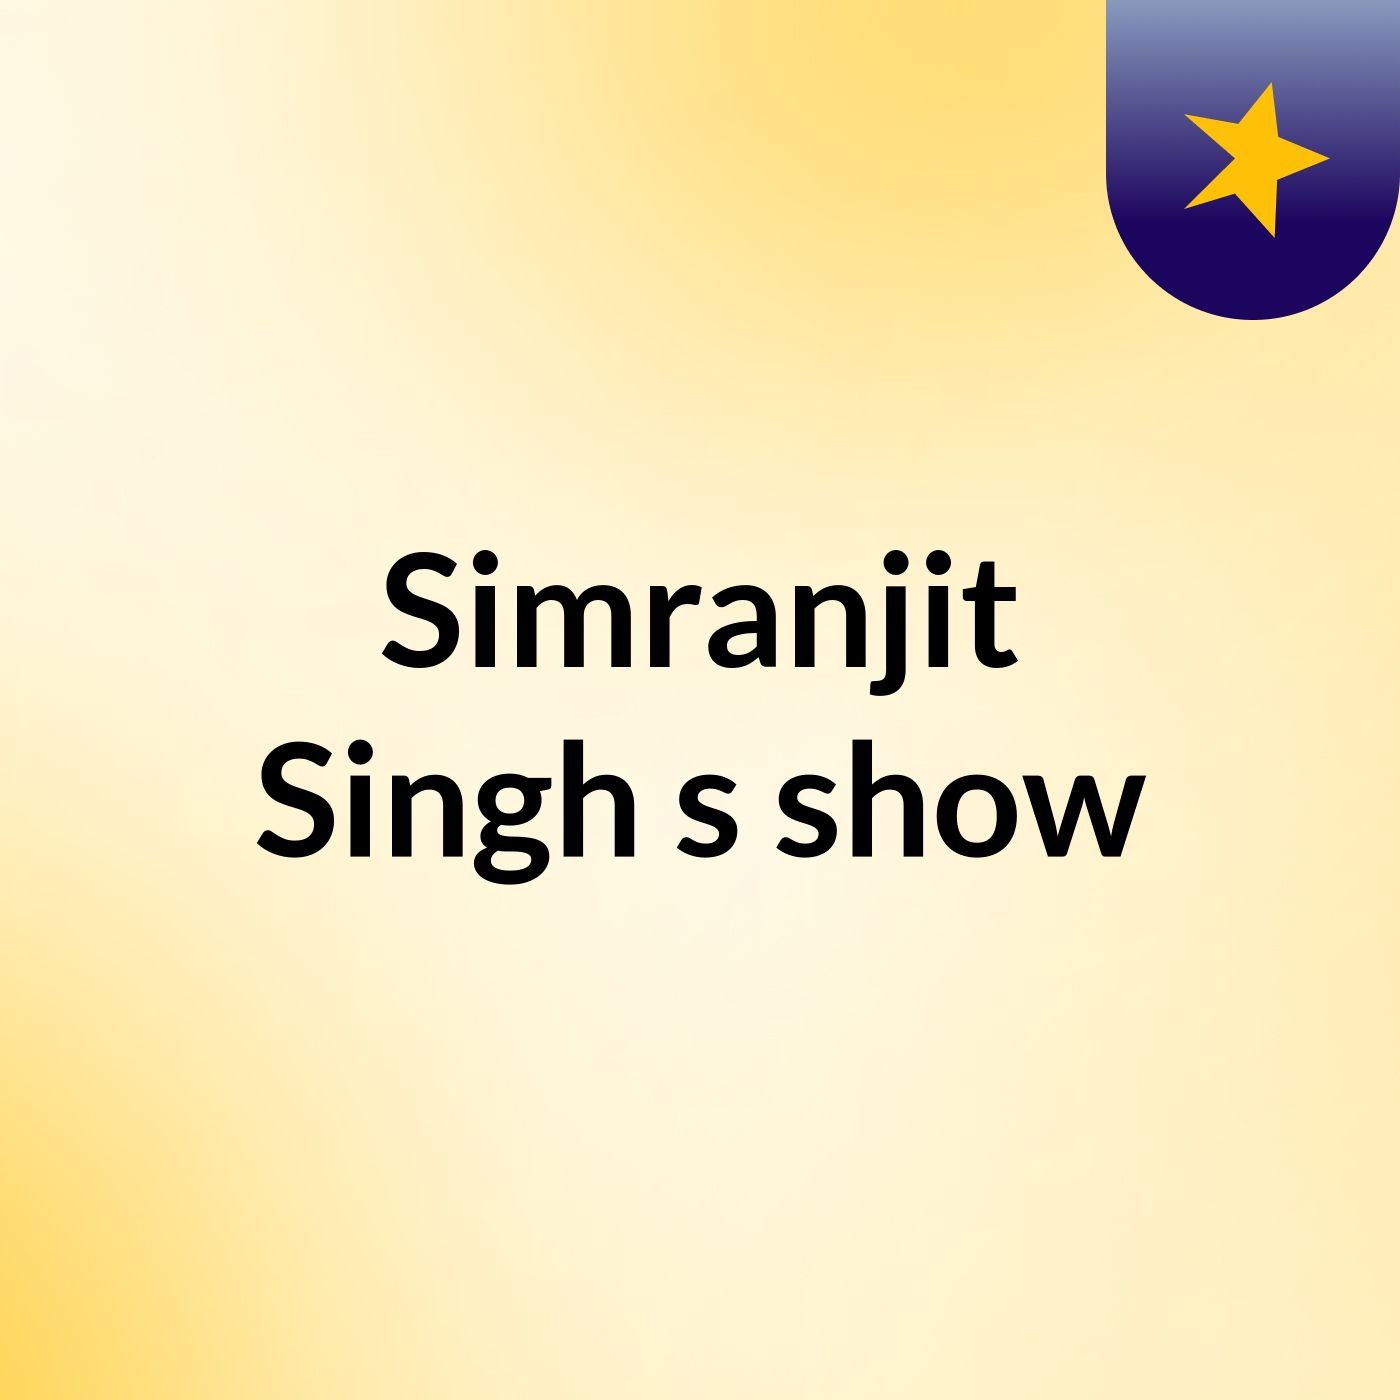 Simranjit Singh's show